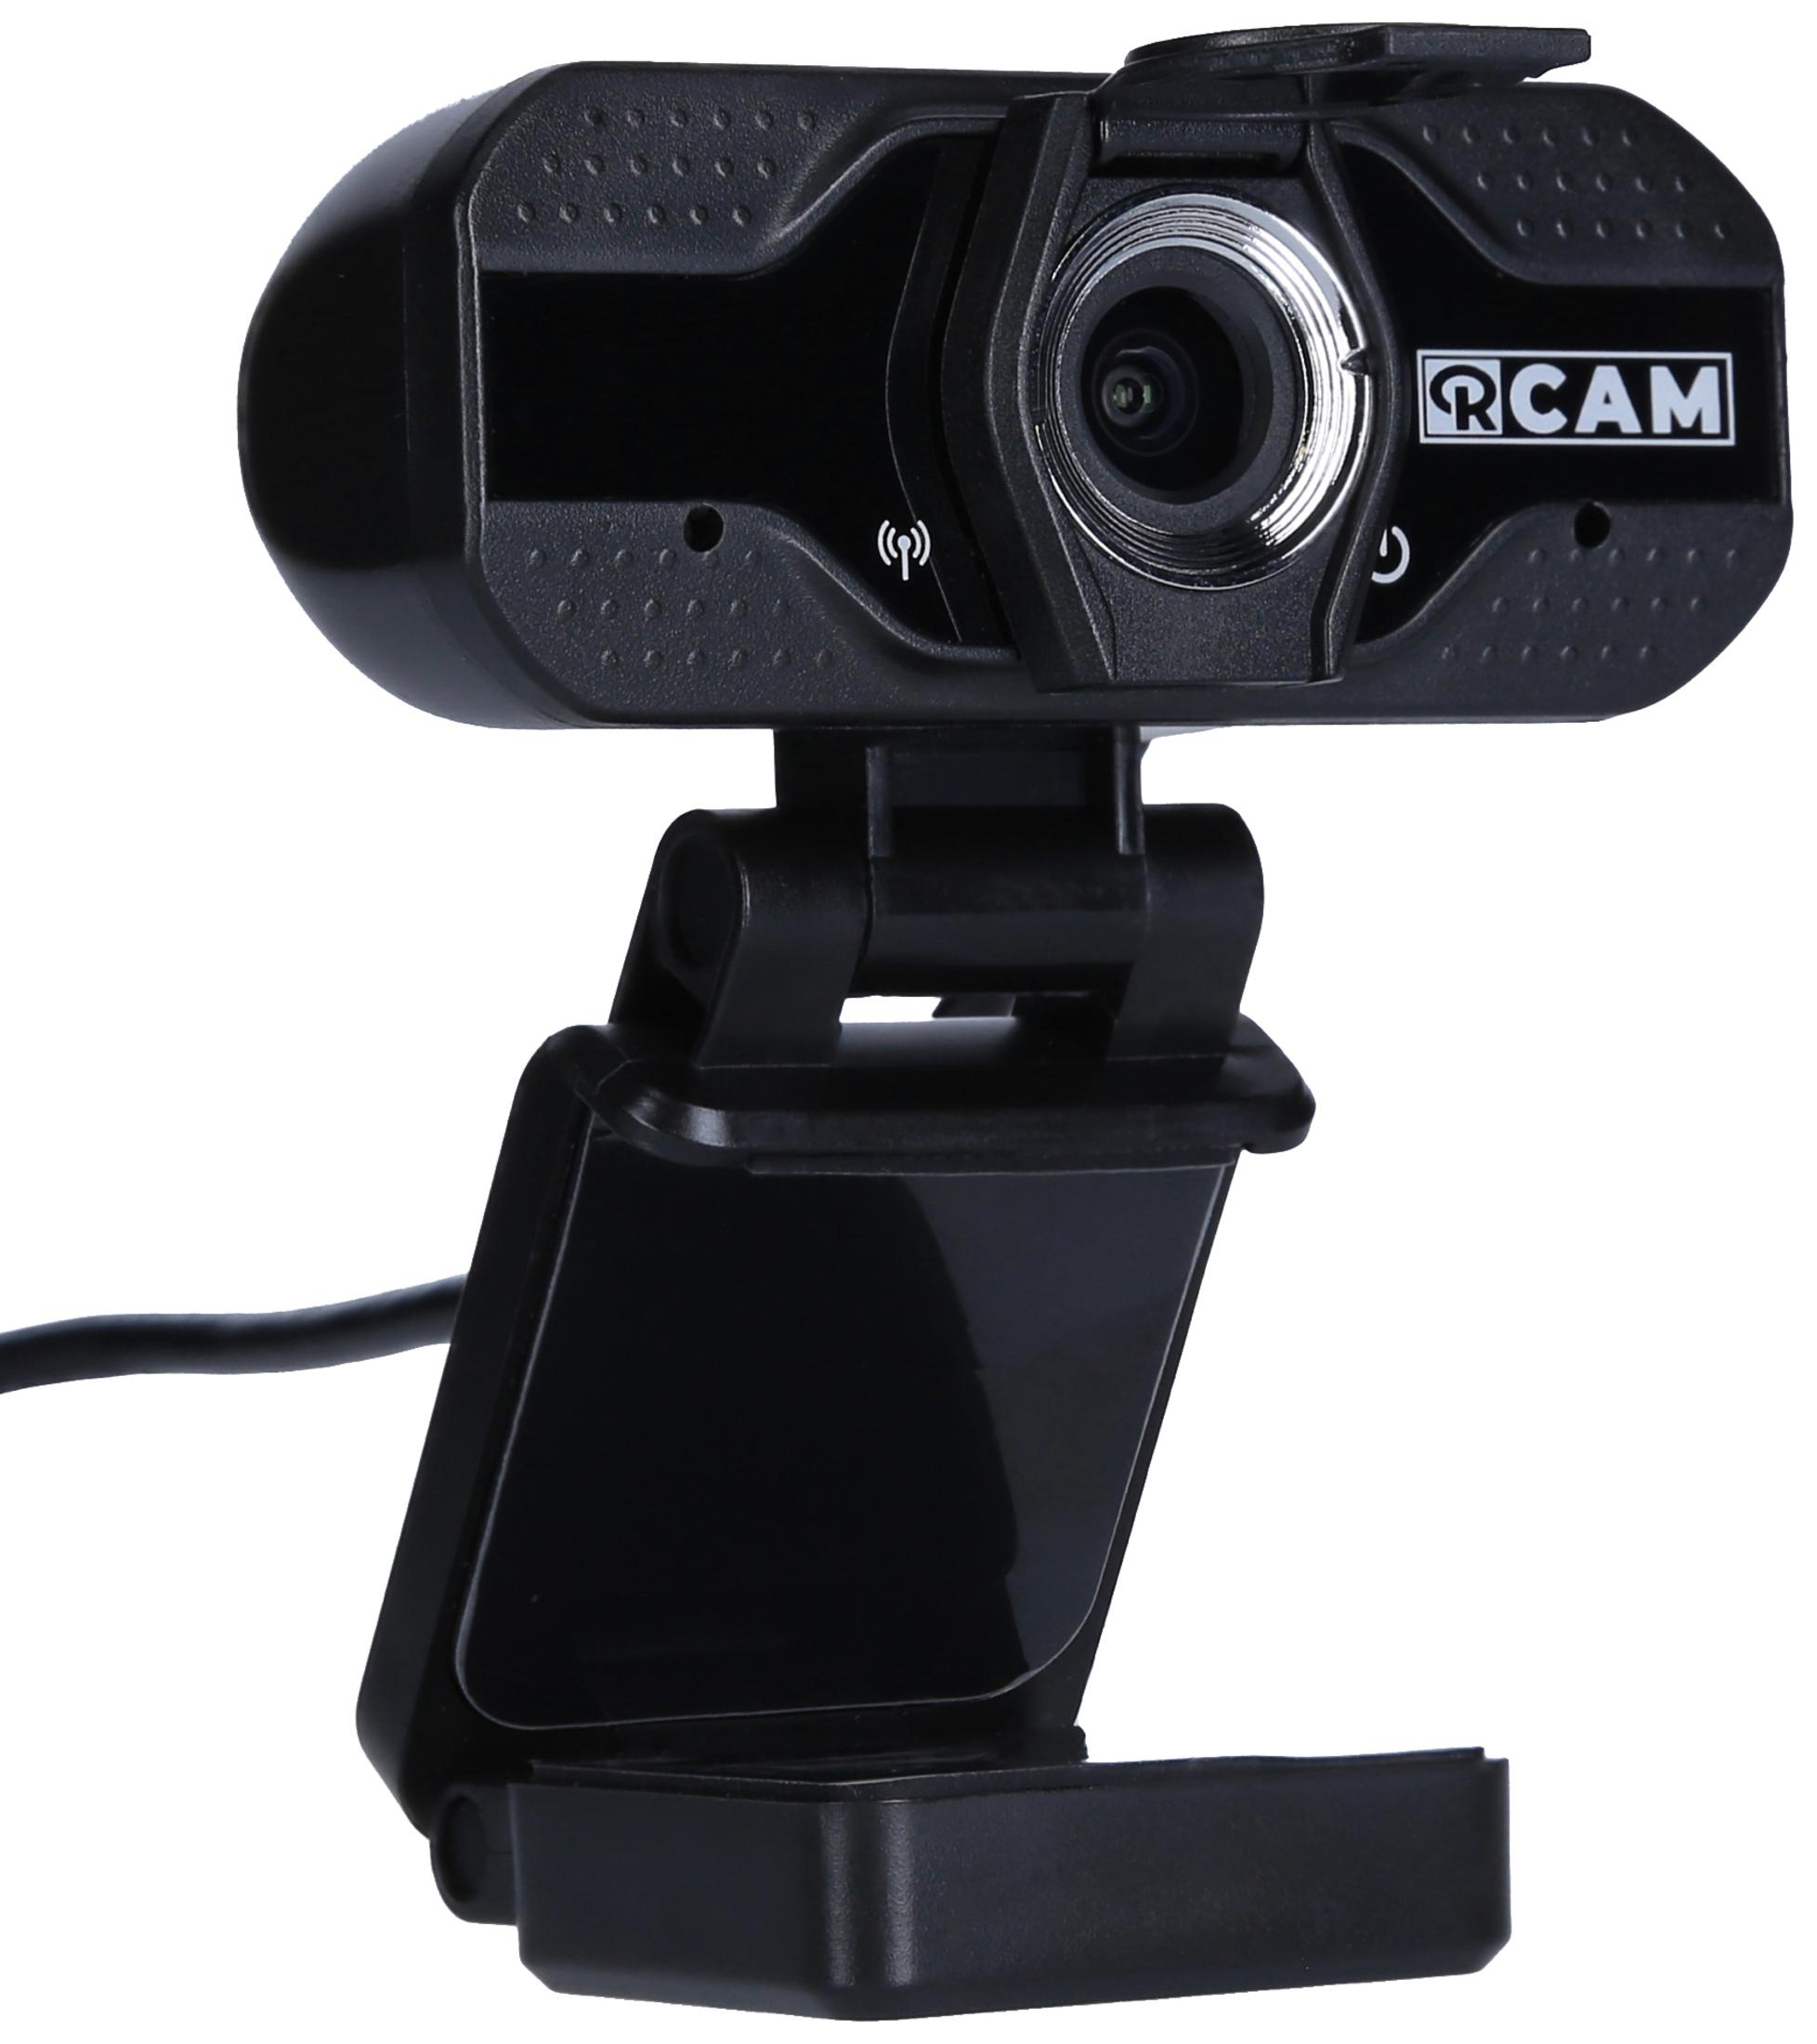 ROLLEI R-CAM 100 WEBCAM Webcam